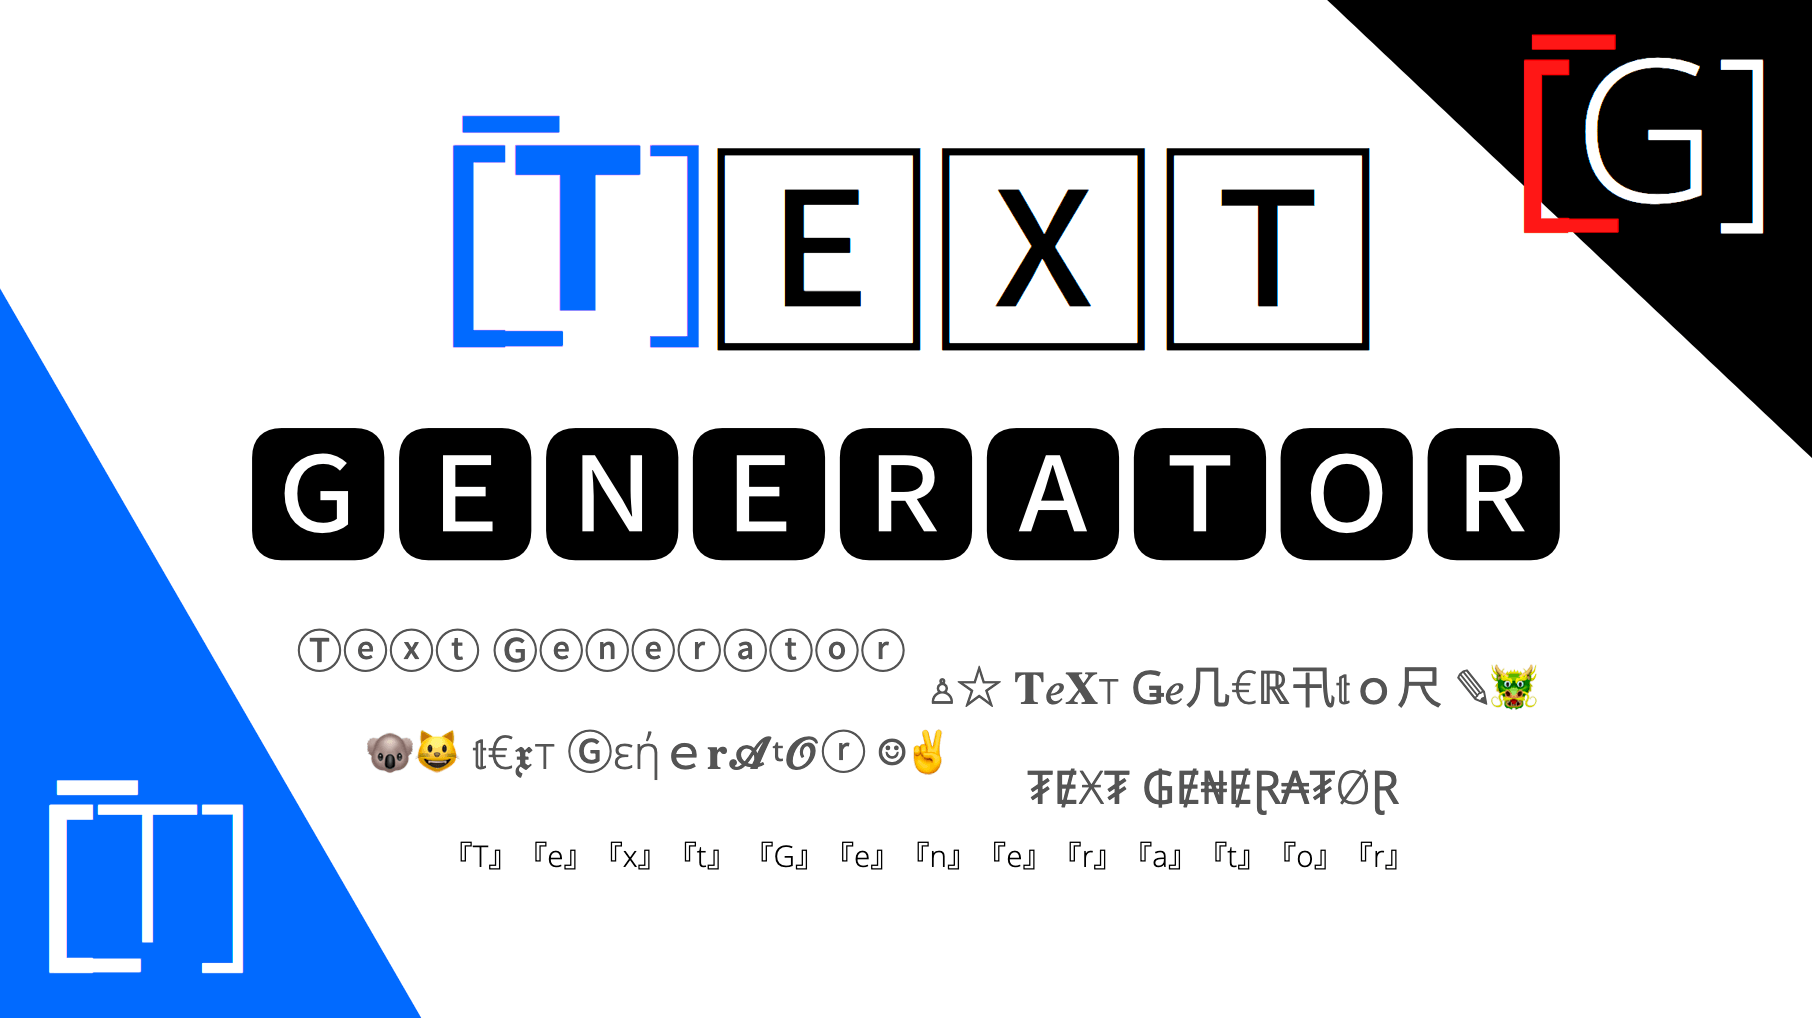 undertale text box image generator